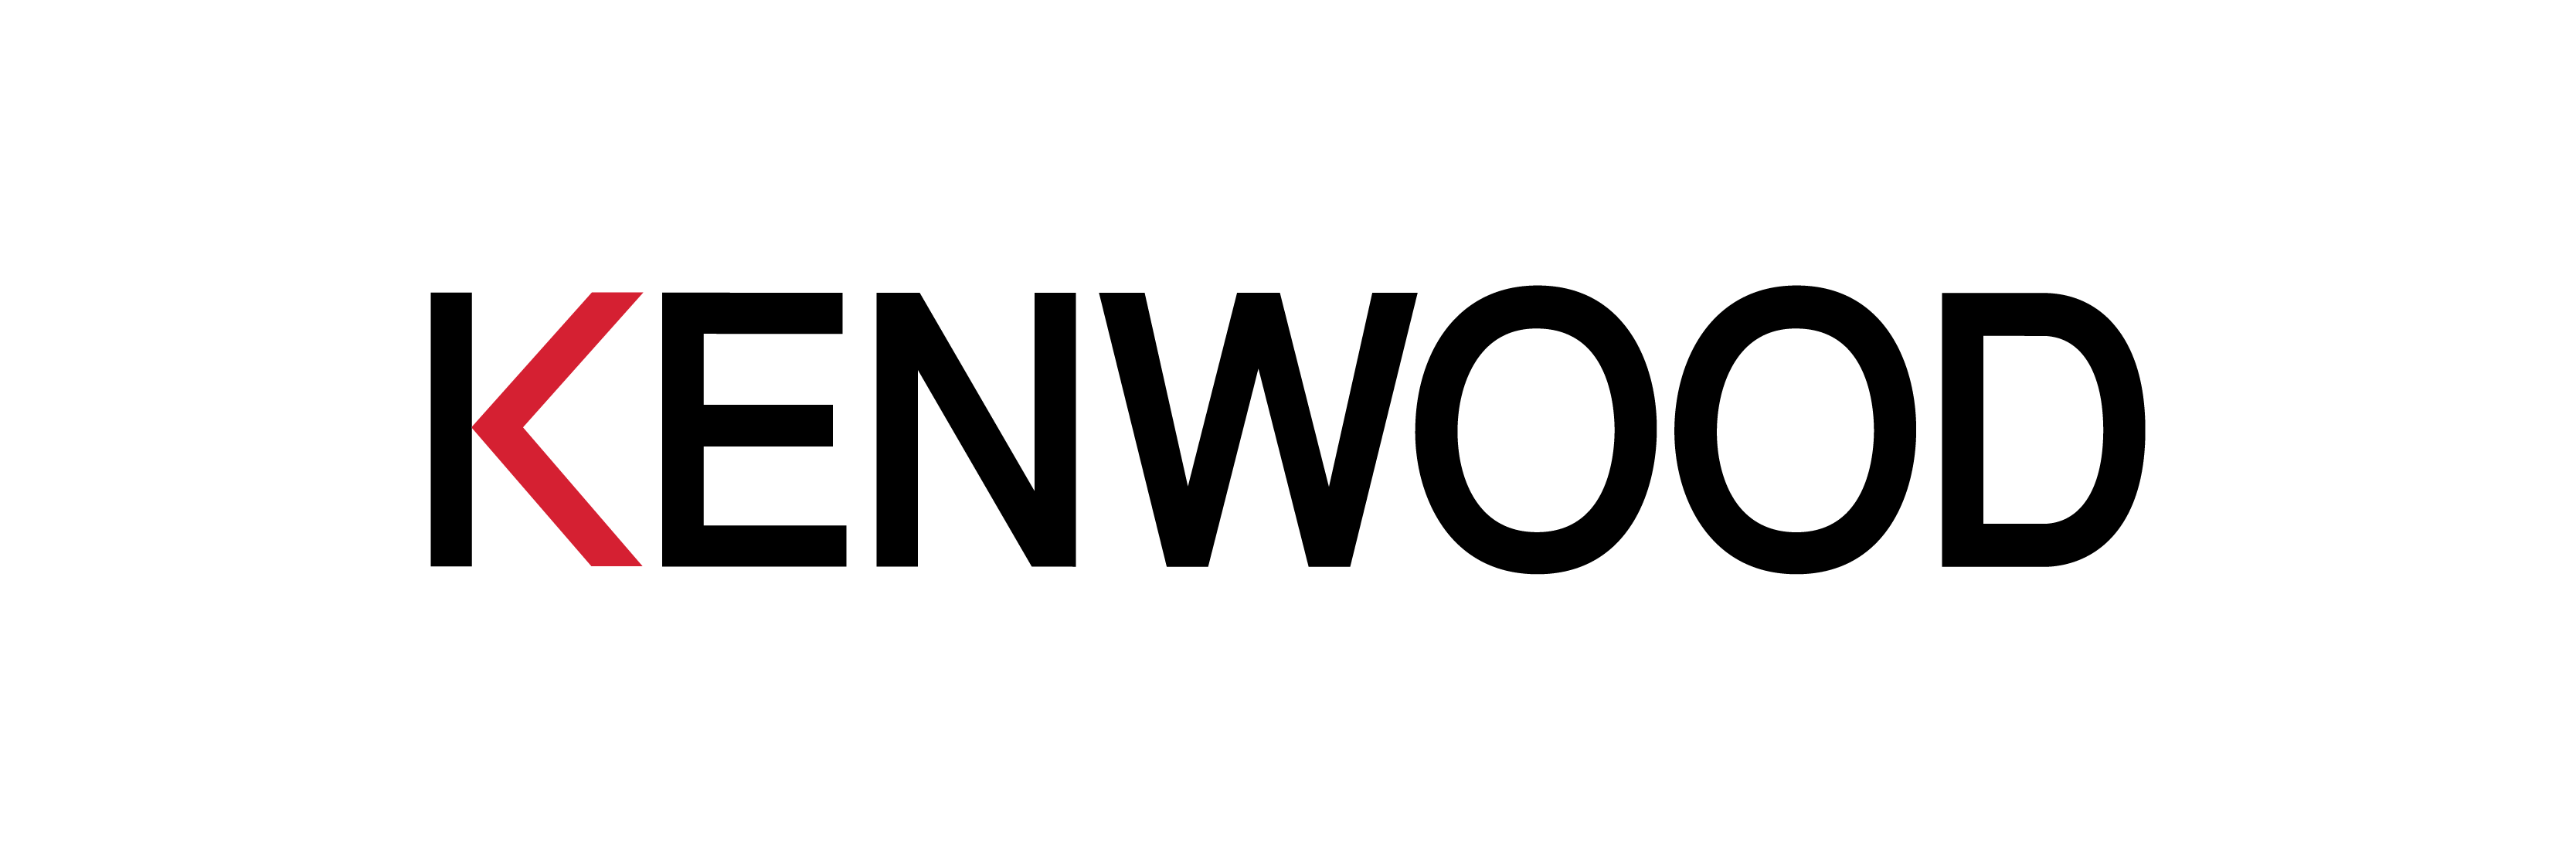 kenwood company